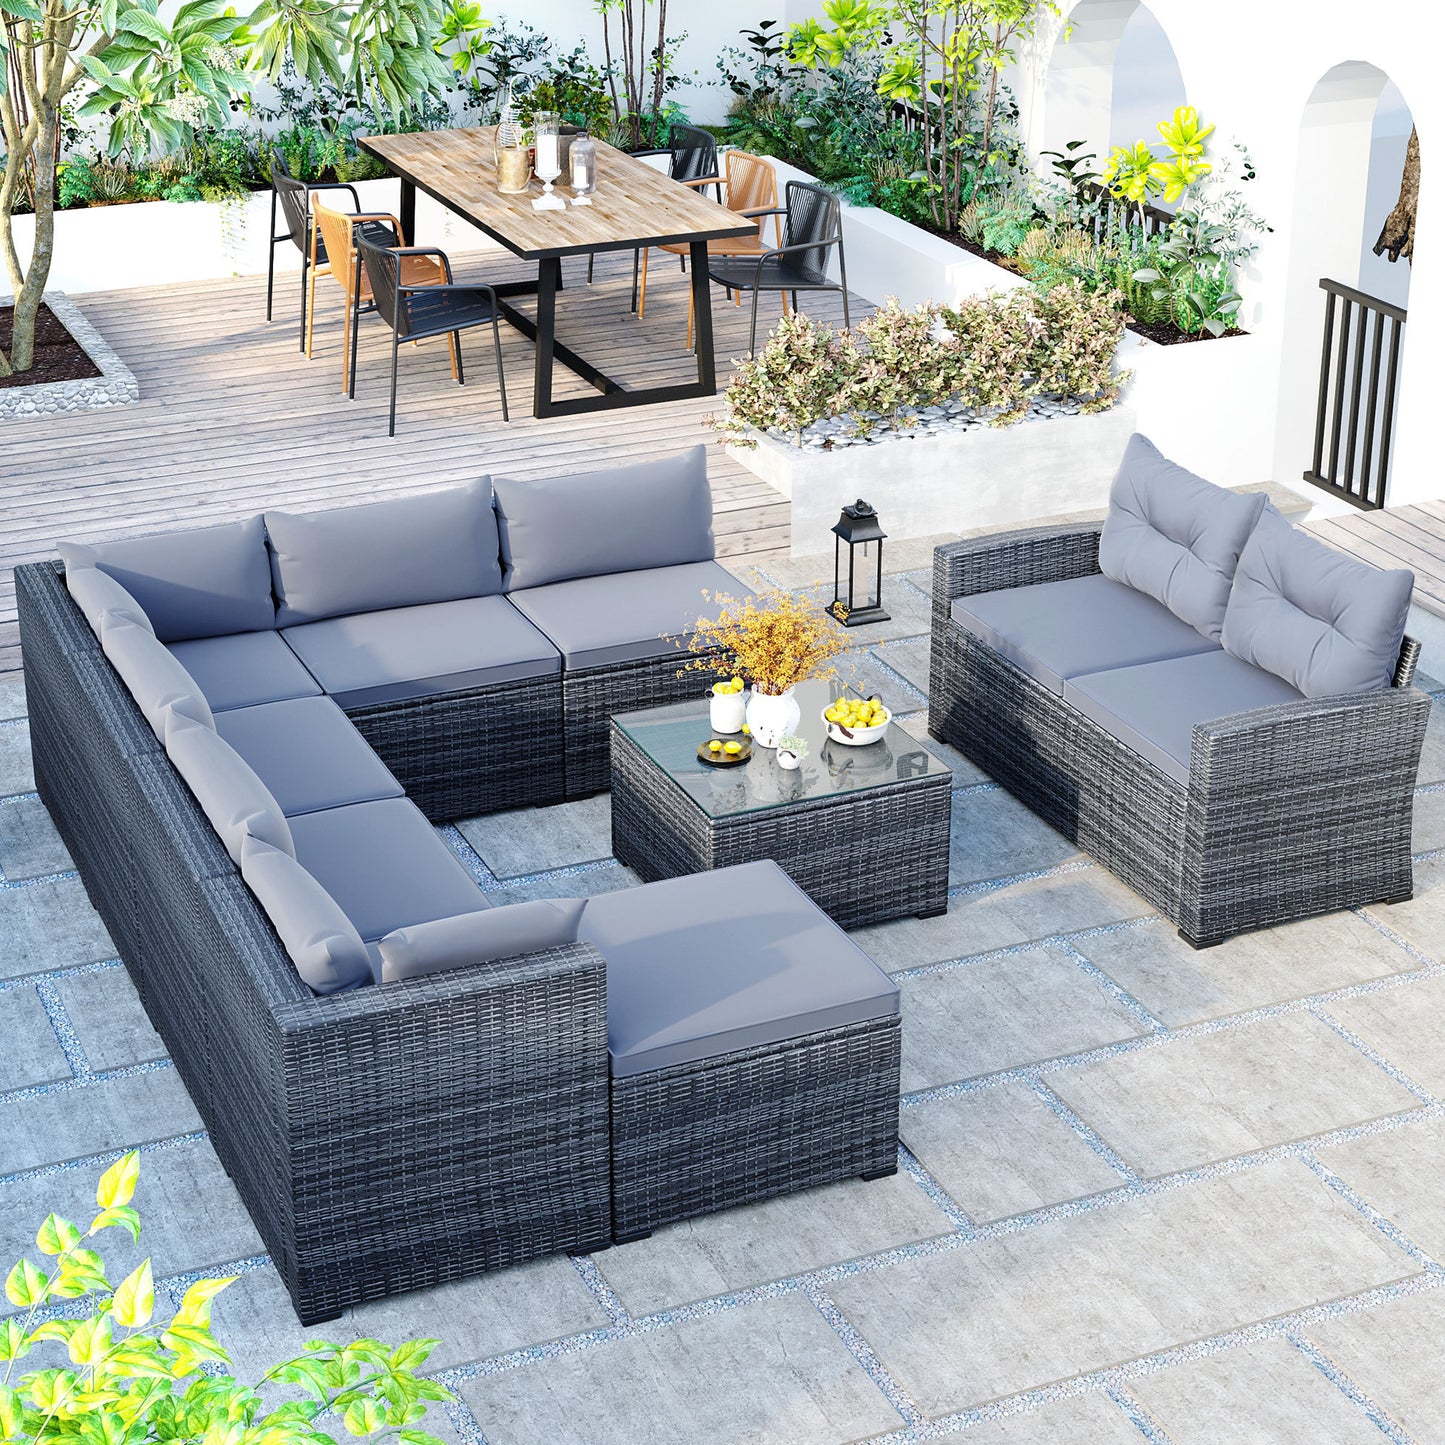 9-piece Outdoor Patio Large Wicker Sofa Set, Rattan Sofa set for Garden, Backyard, Porch and Poolside, Gray wicker, Gray Cushion